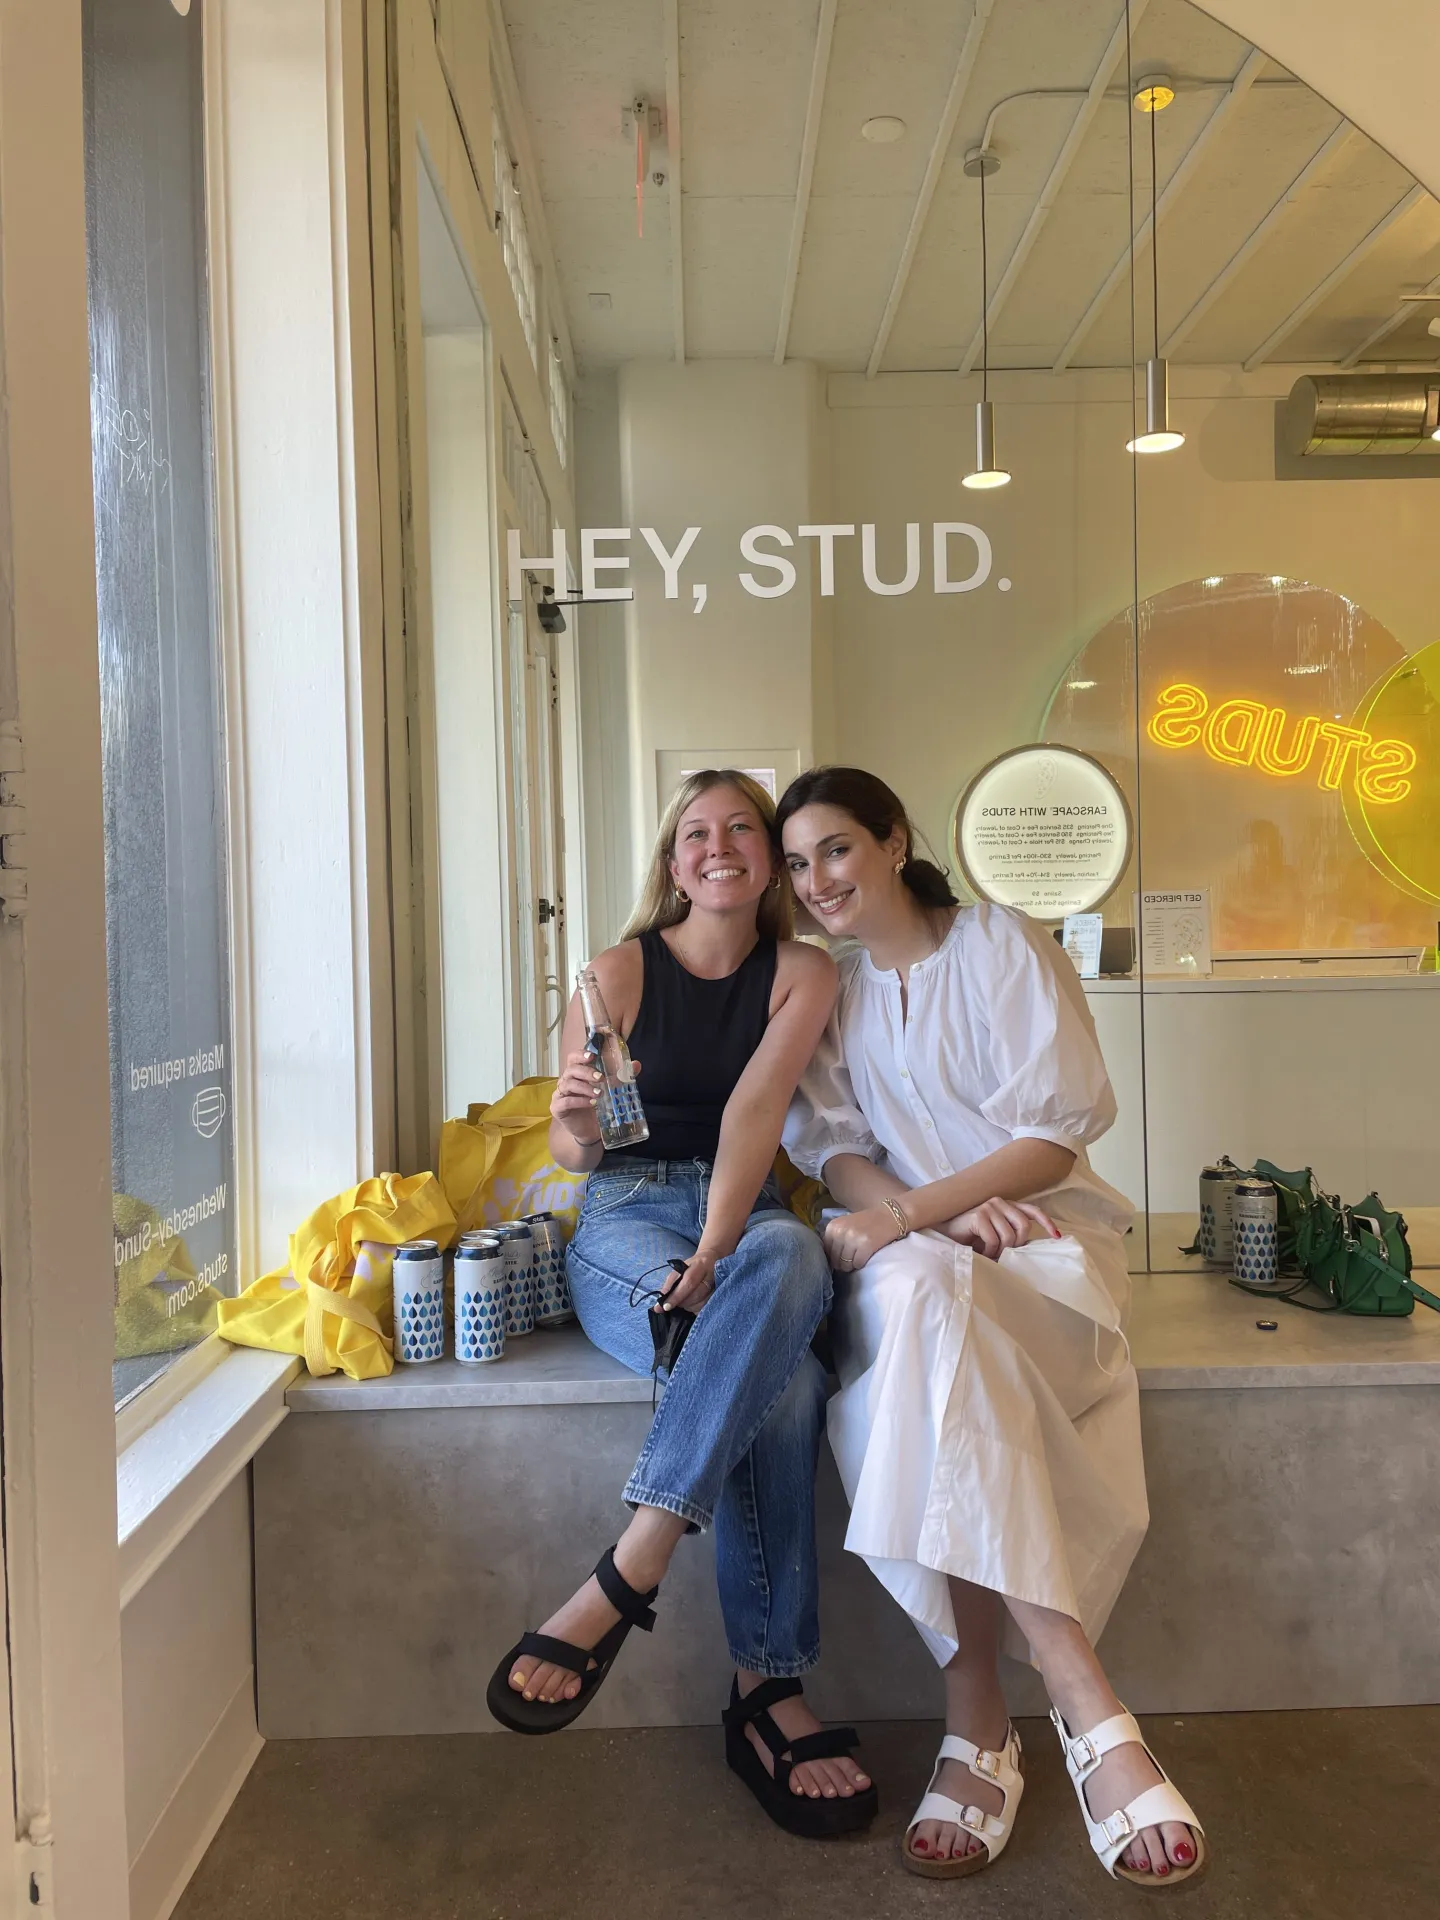 Studs founders Anna Harman and Lisa Bubbers sitting near a window